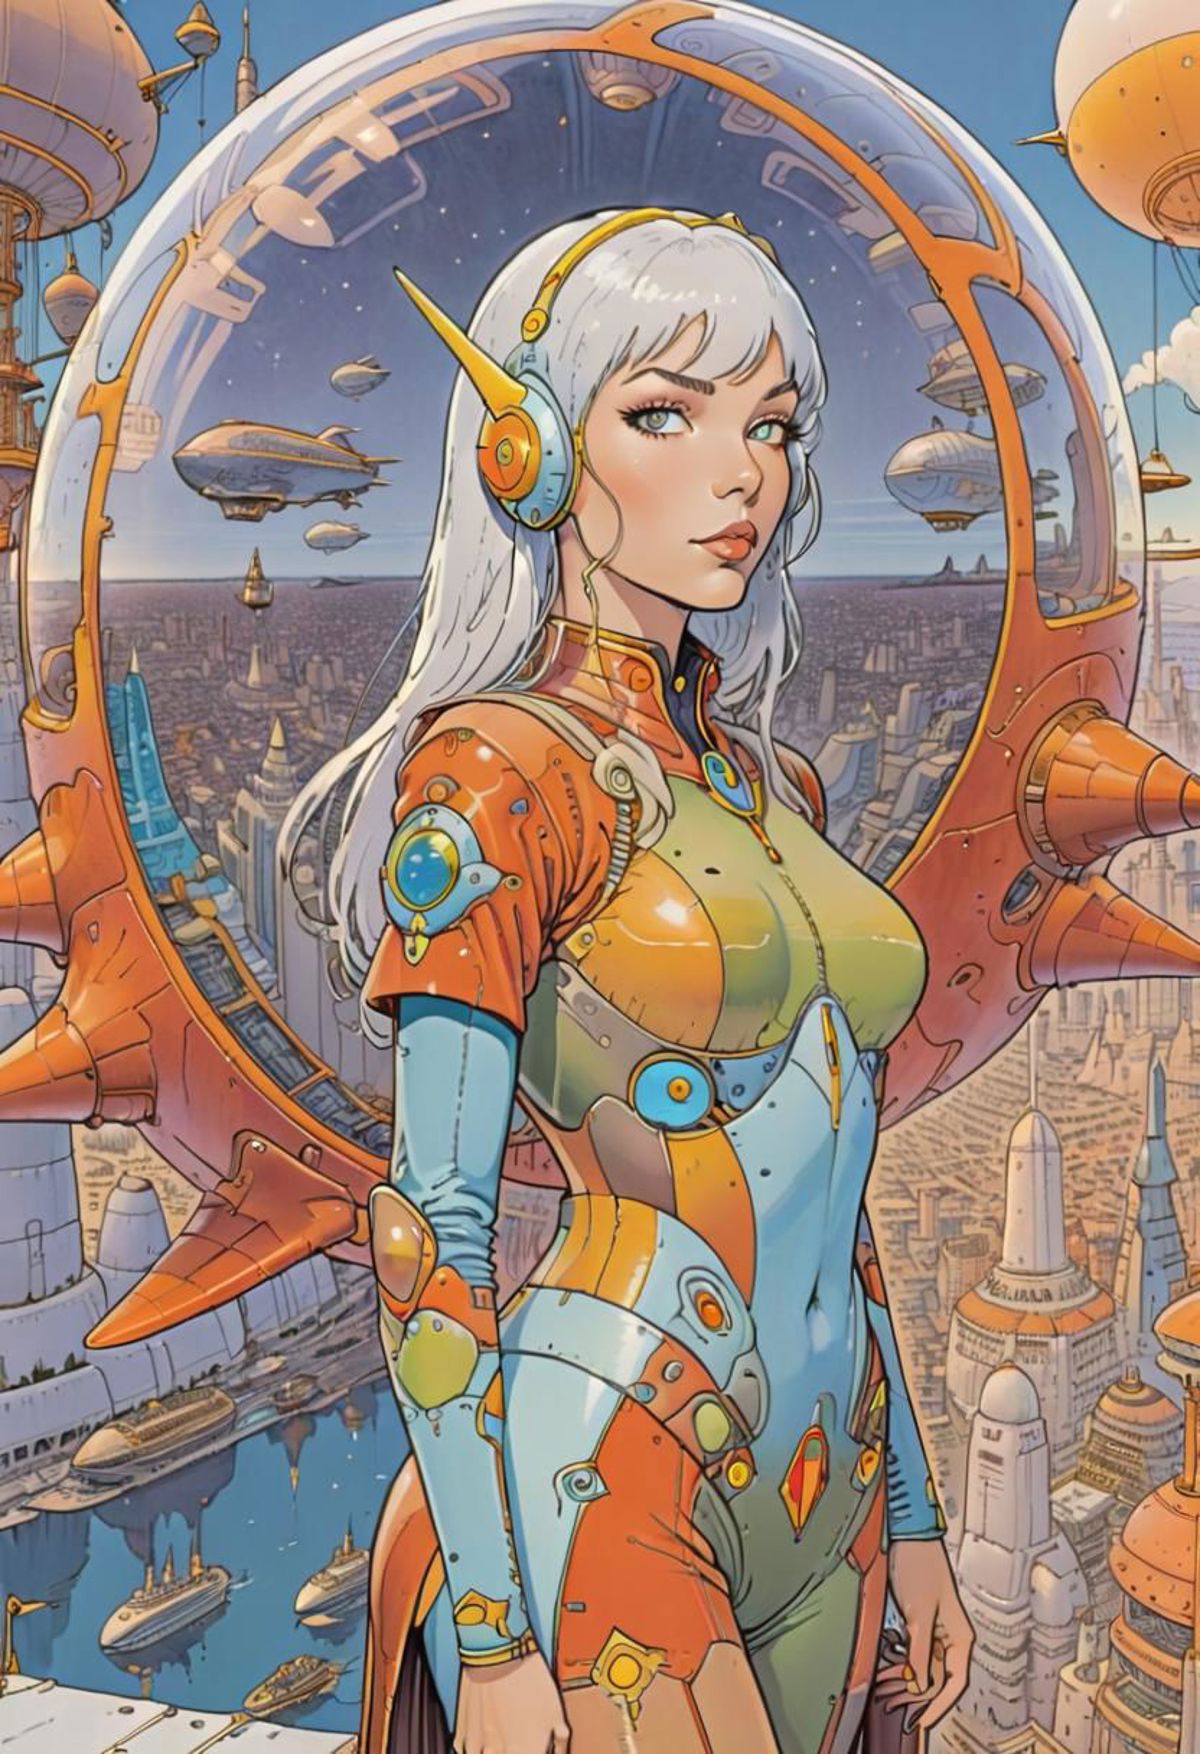 A woman in a futuristic orange and blue costume stands in front of a futuristic city.